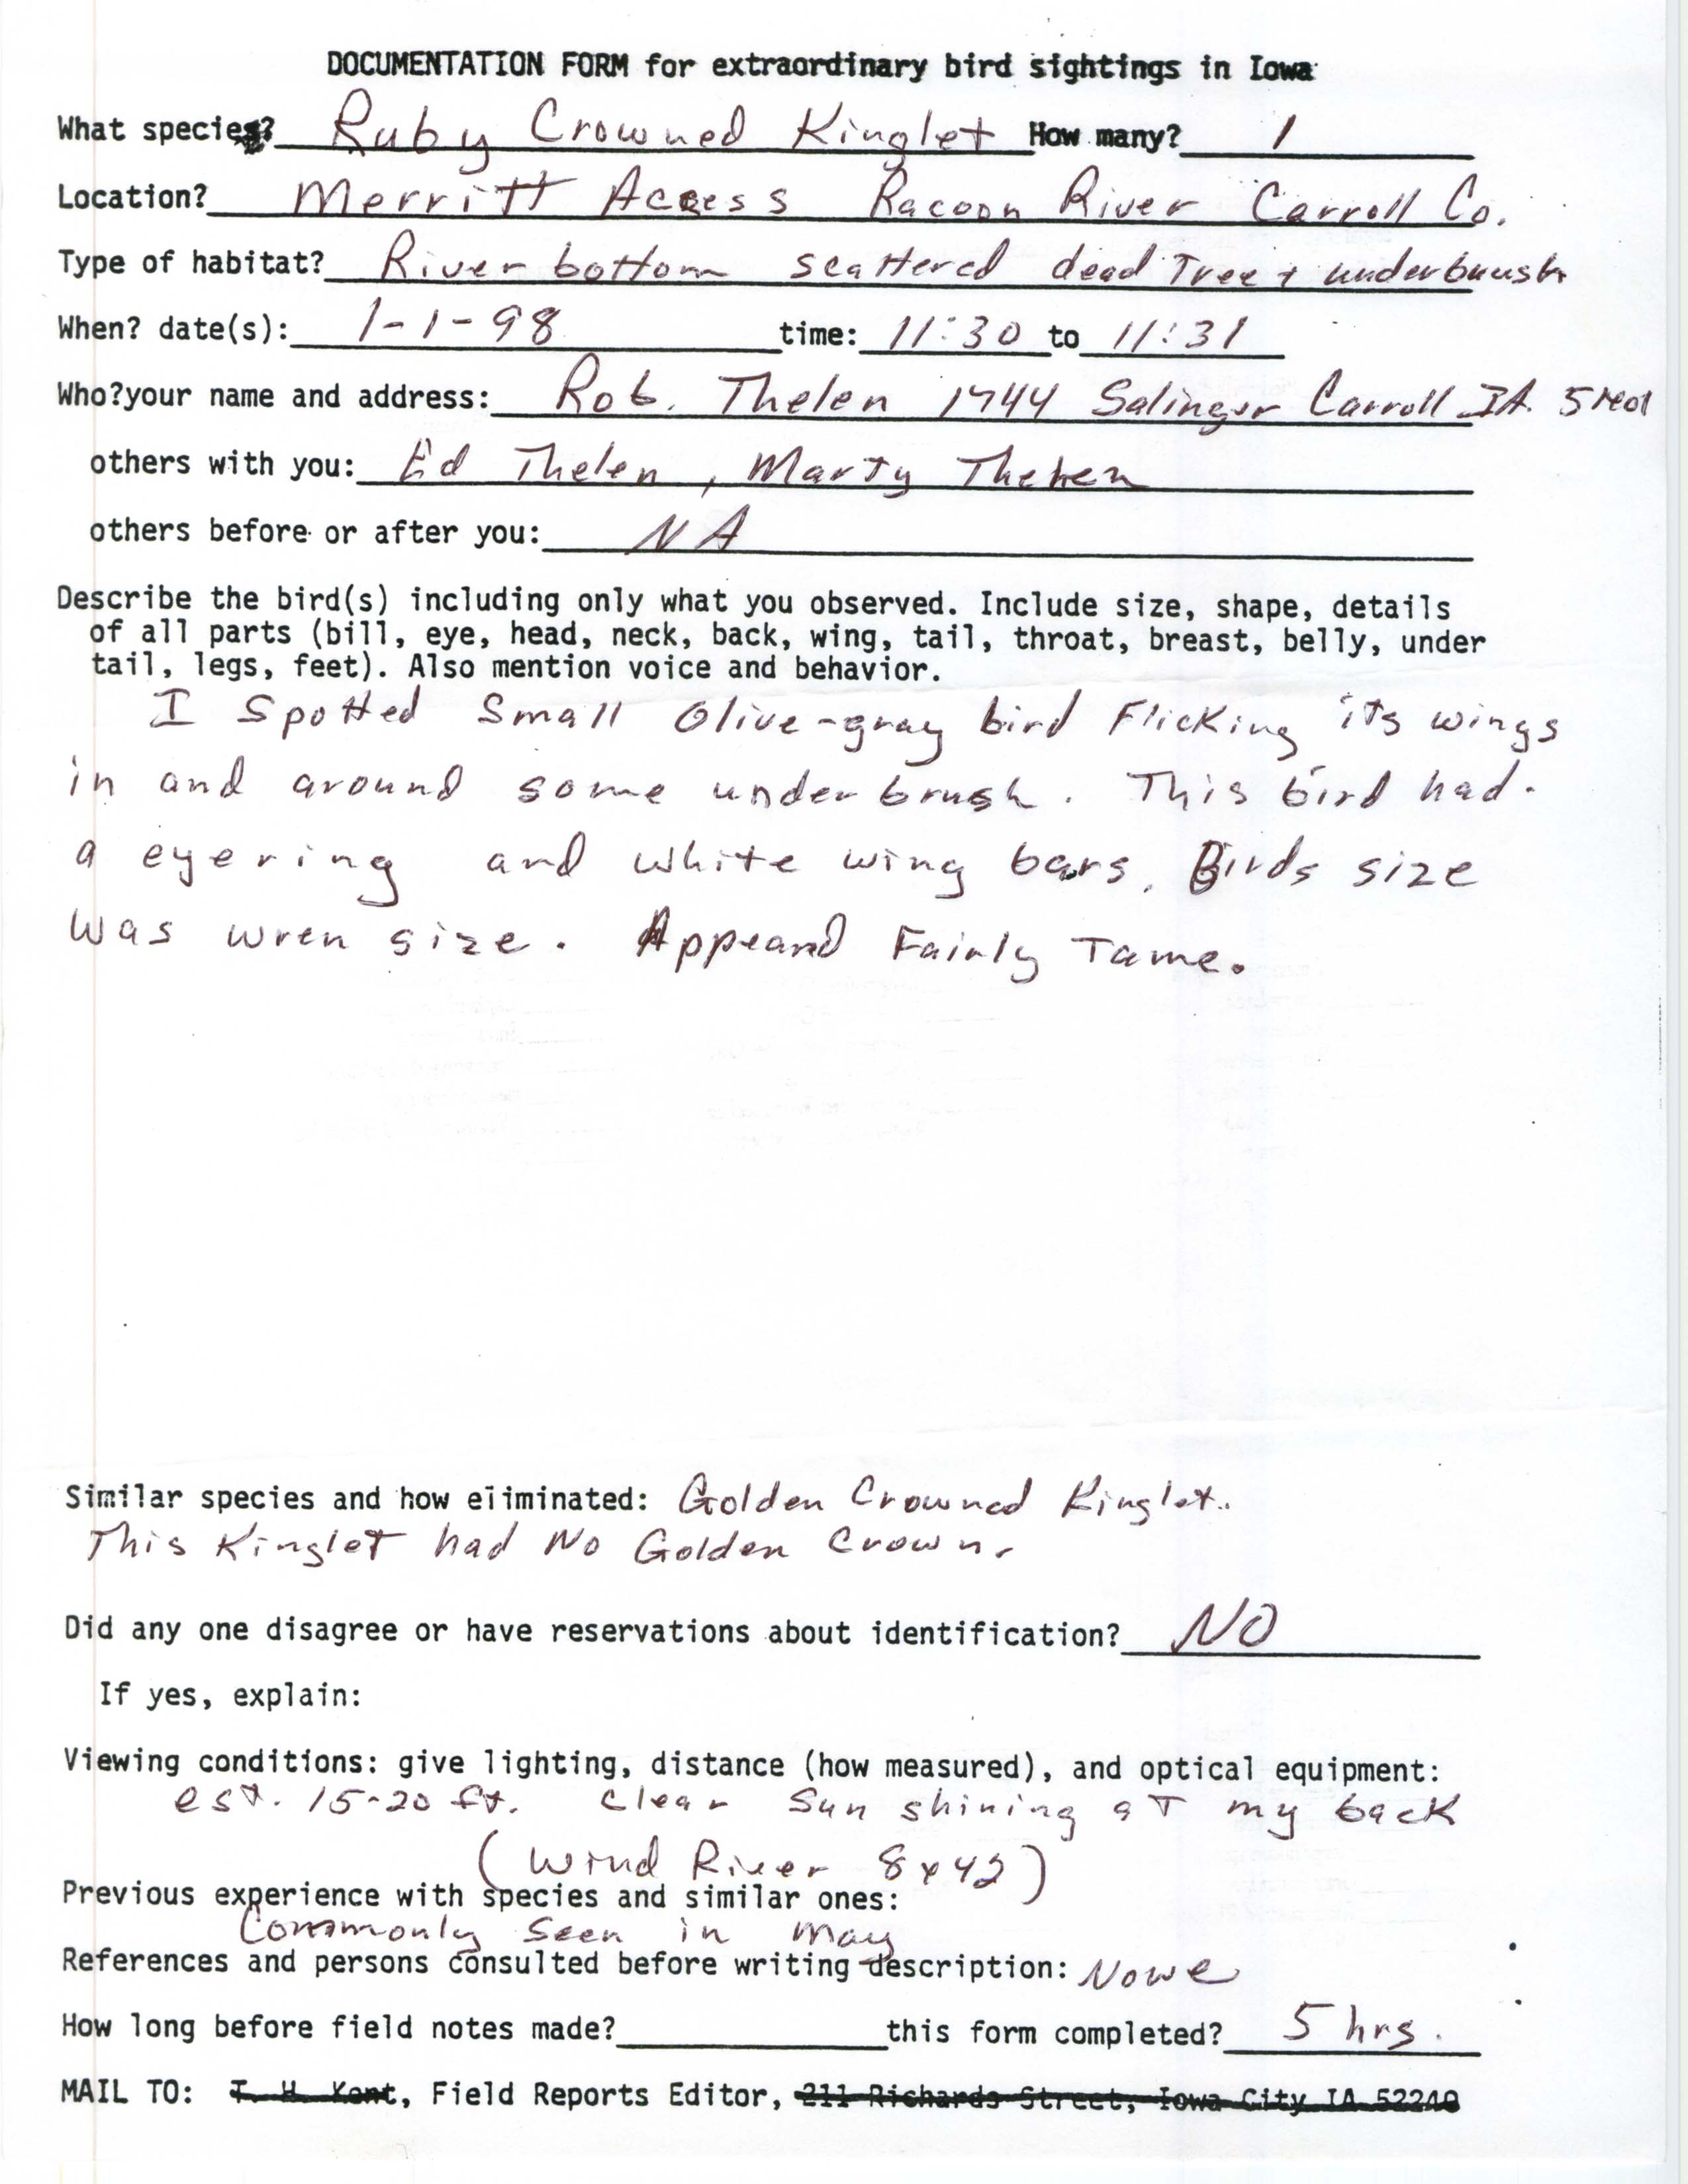 Rare bird documentation form for Ruby-crowned Kinglet at Merritt County Park, 1998